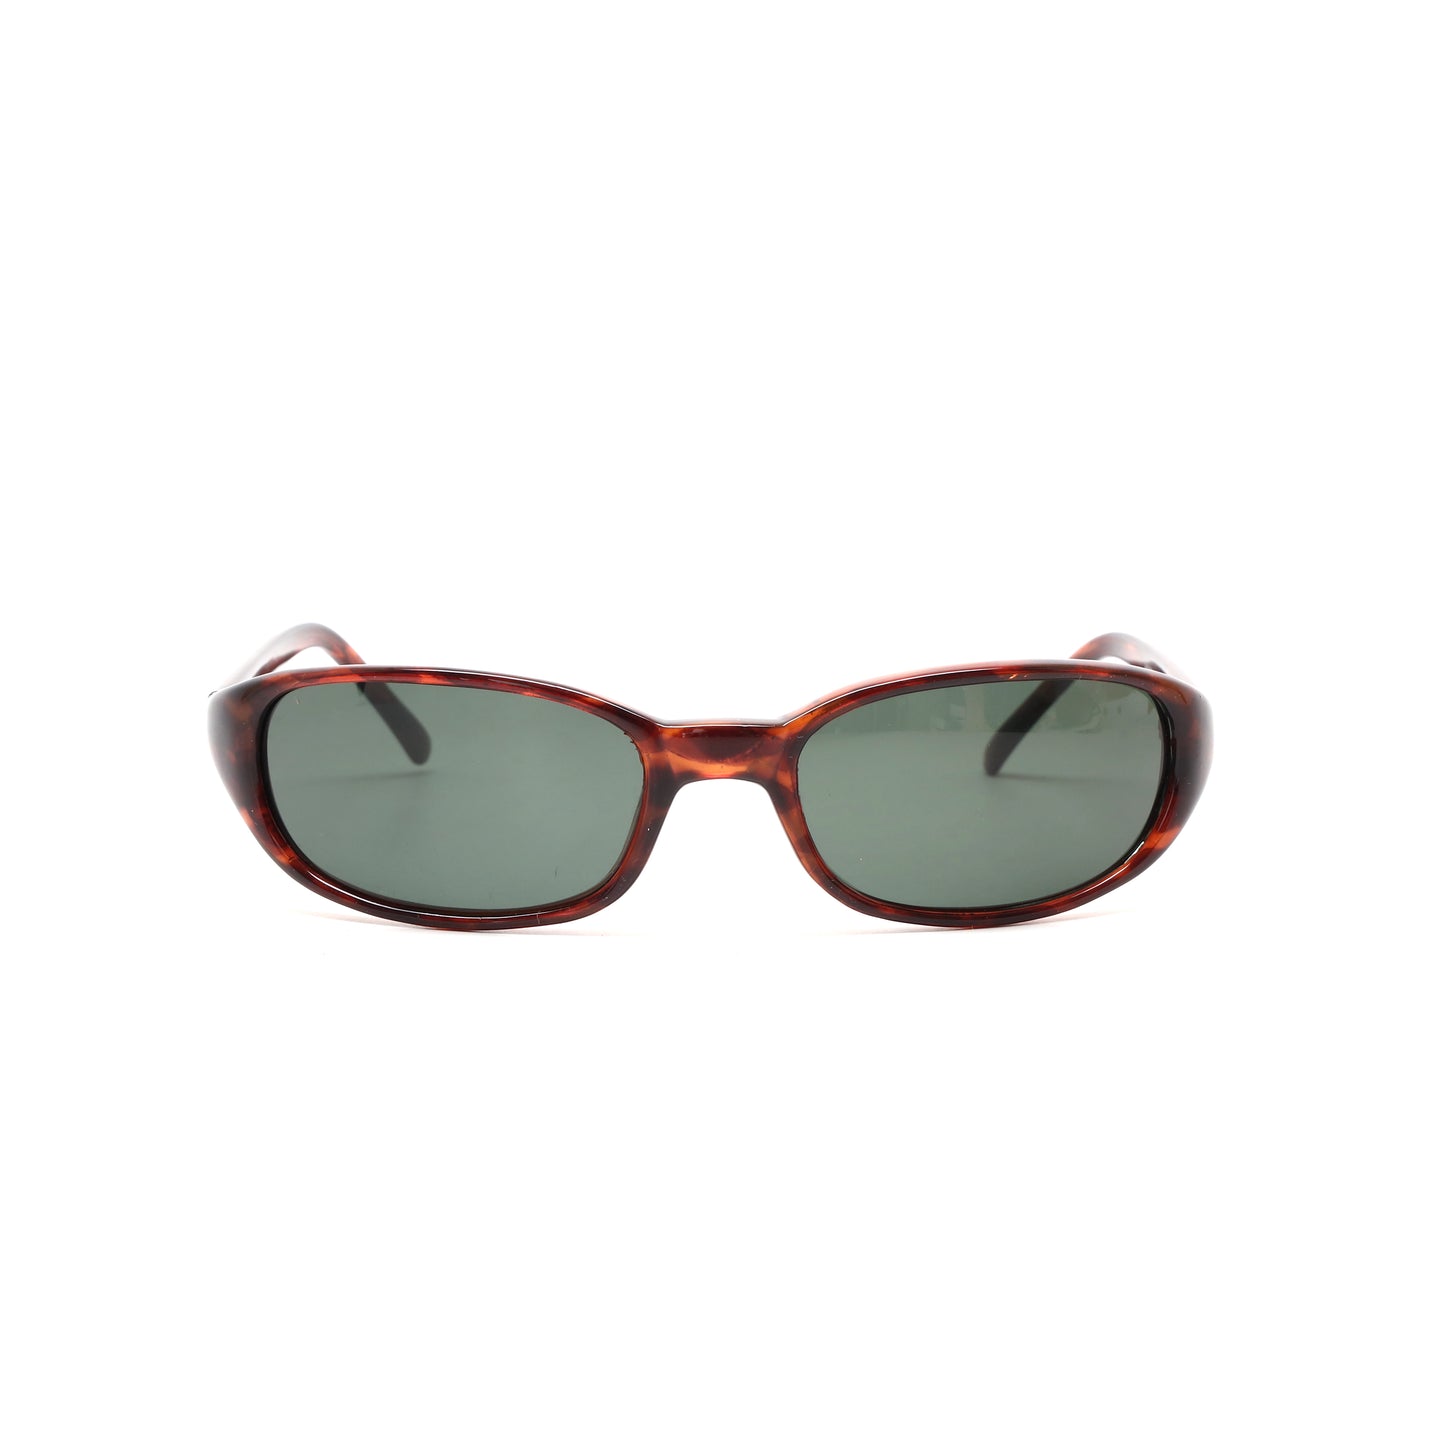 Deluxe Vintage 90s Deadstock Wraparound Oval Sunglasses - Tortoise